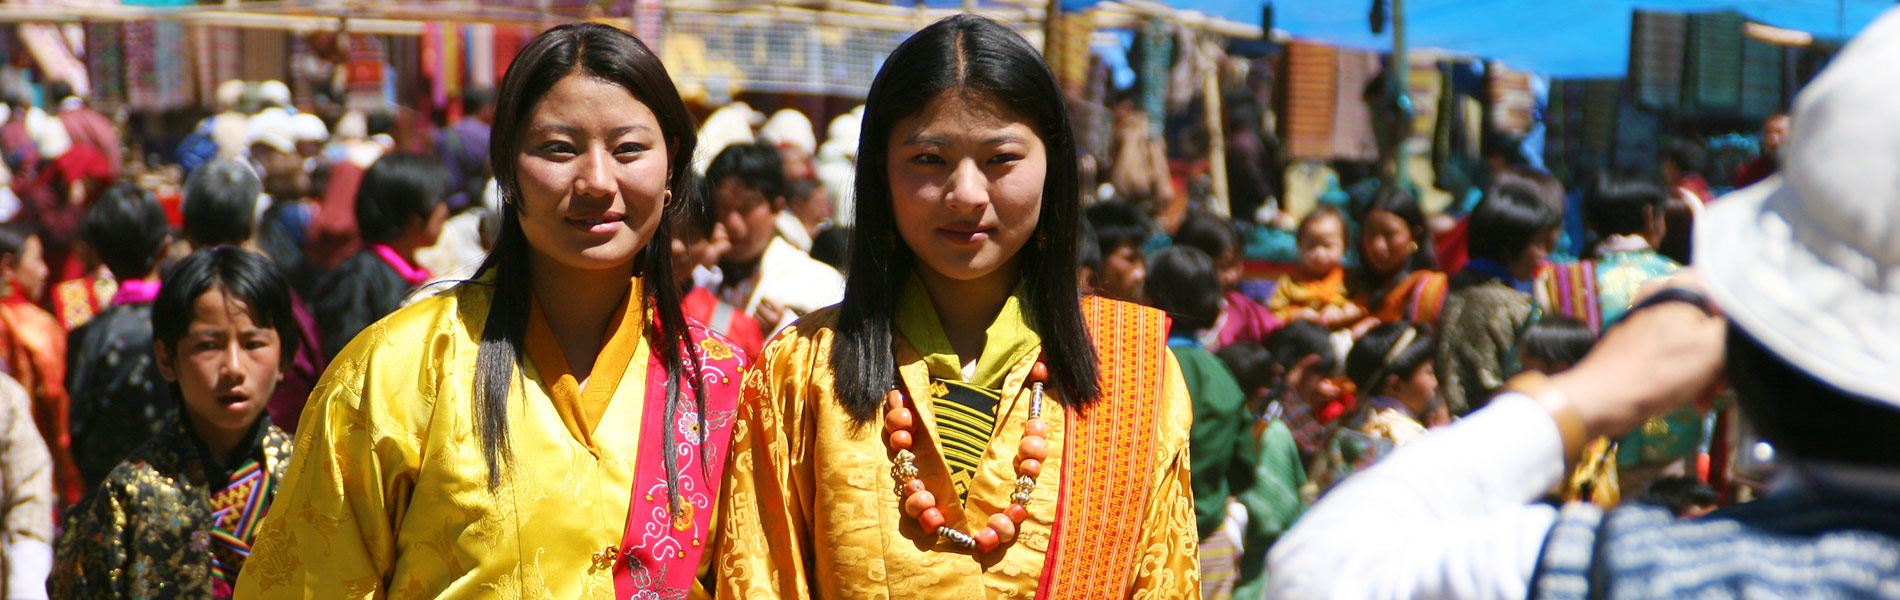 Traditional costumes of Bhutan